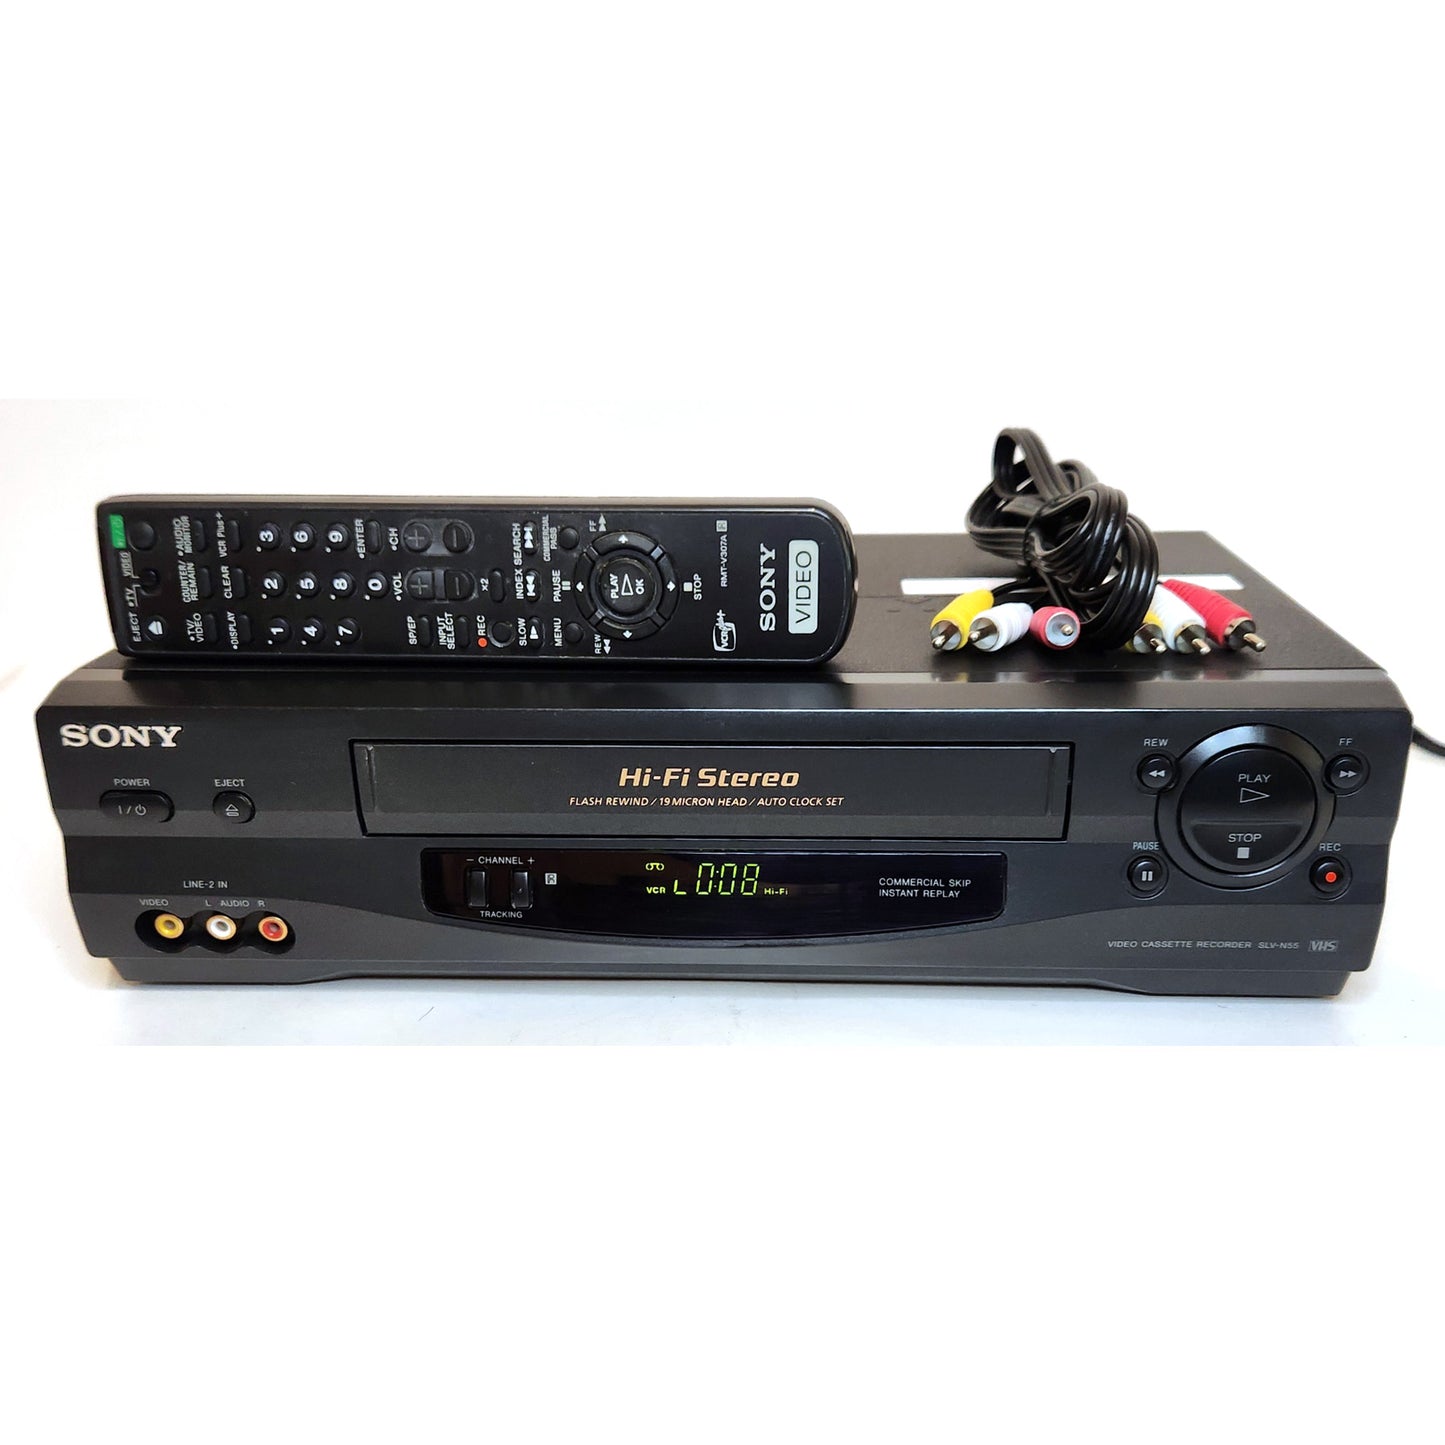 Sony SLV-N55 VCR, 4-Head Hi-Fi Stereo